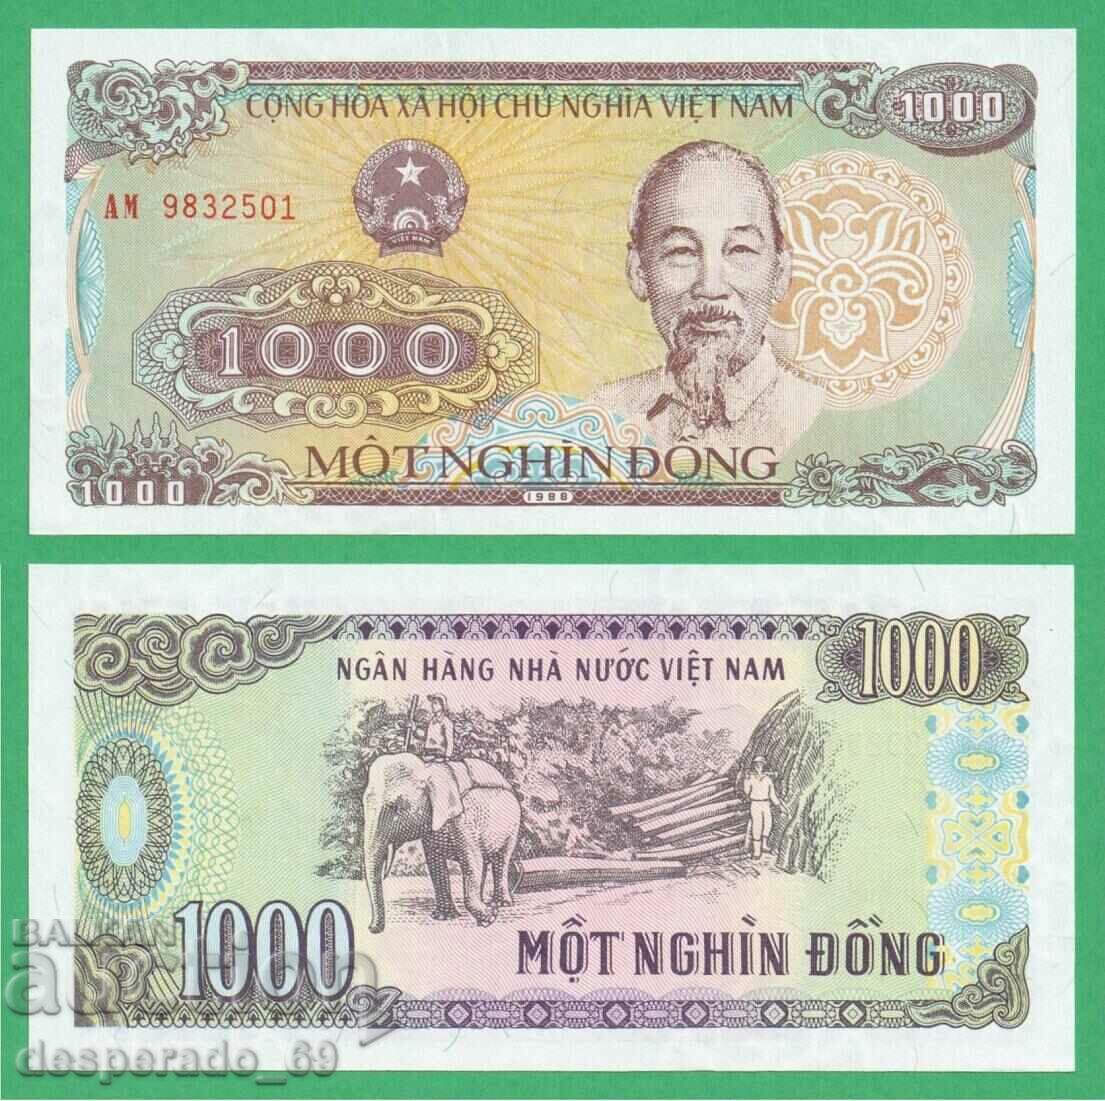 (¯ ° '• .¸ VIETNAM 1000 донг 1988 UNC ¯ ¯ ¯ ¯ ¯)